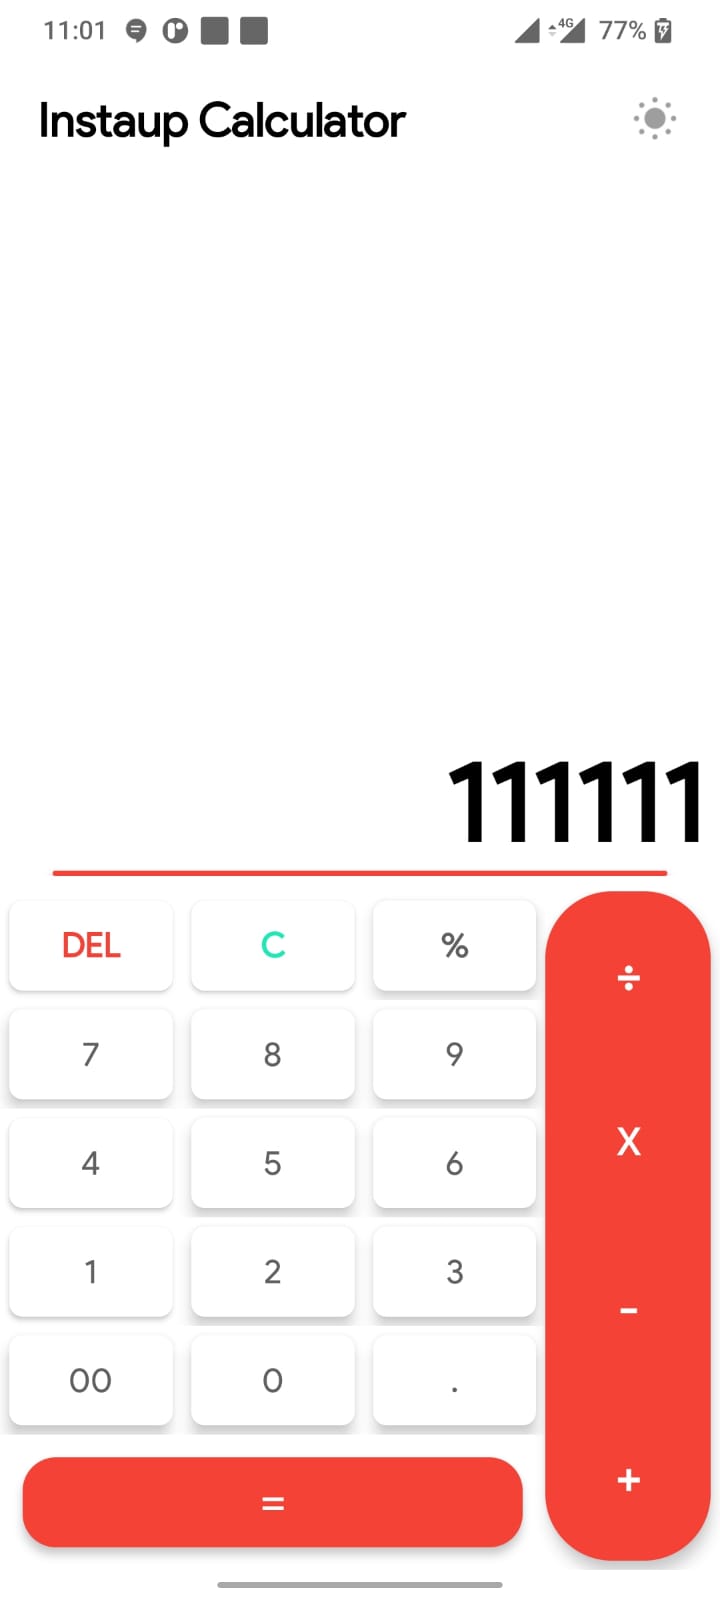 Instaup Calculator